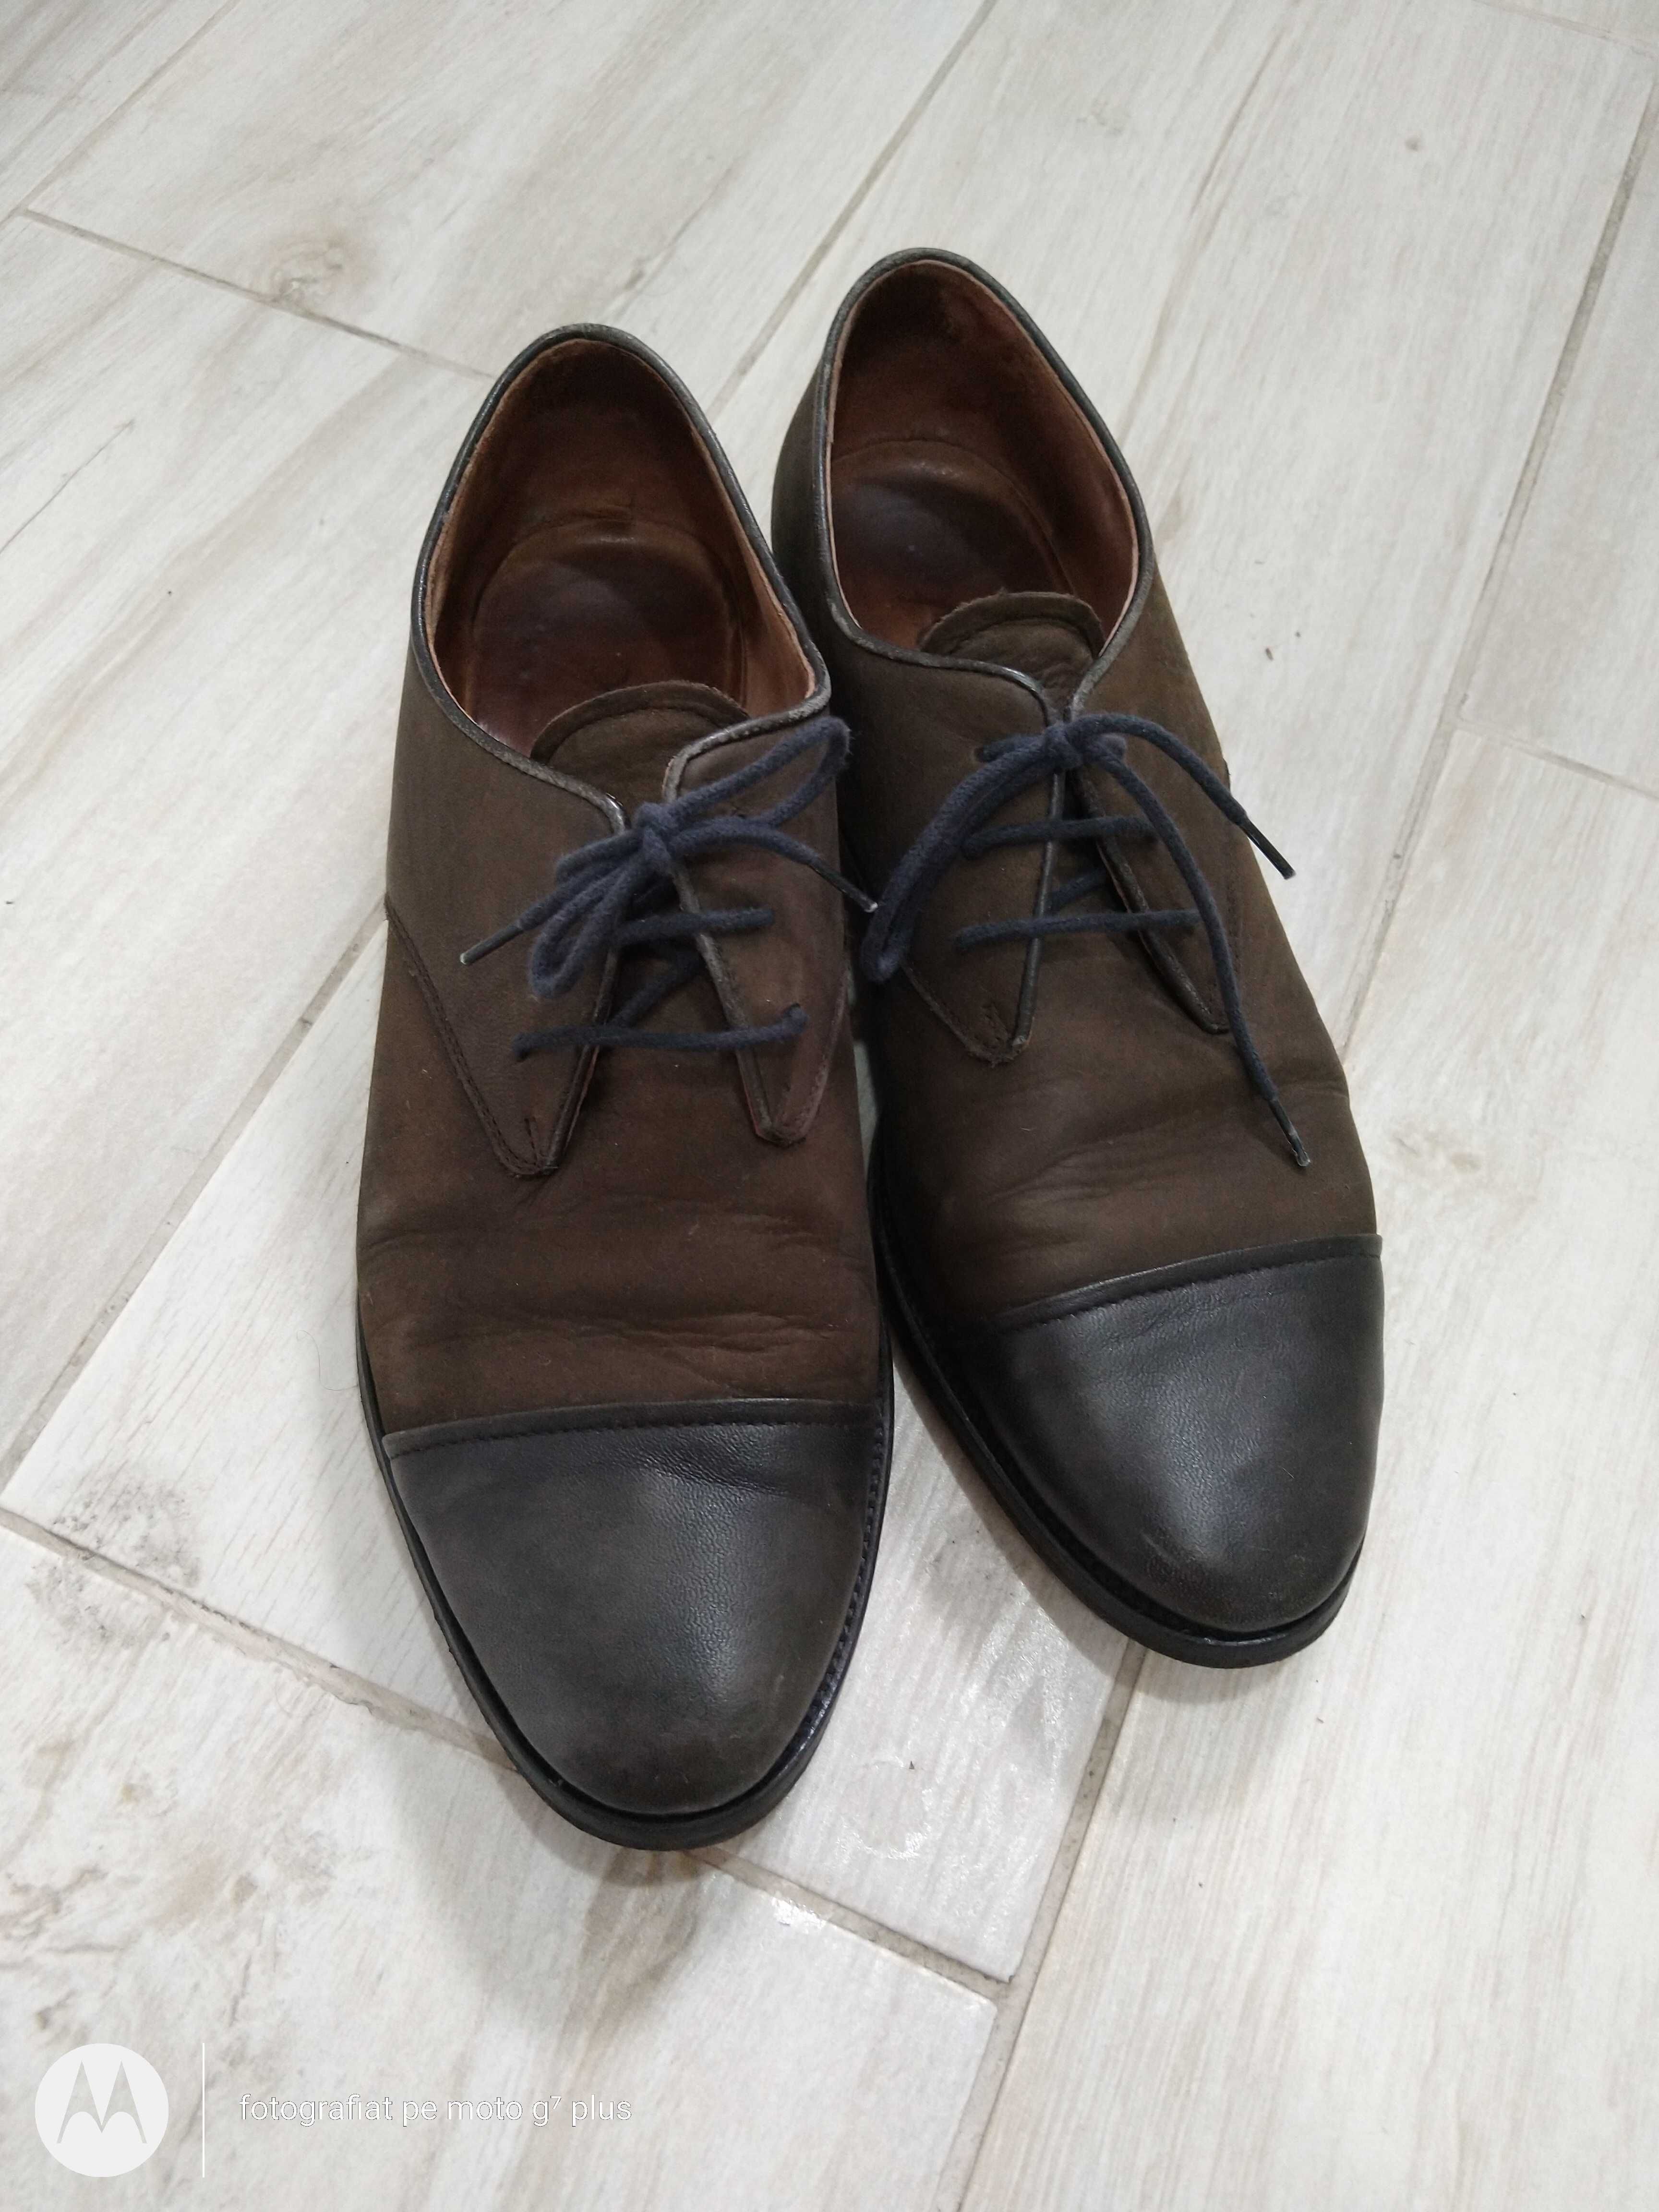 Pantofi piele Il passo, office, 39